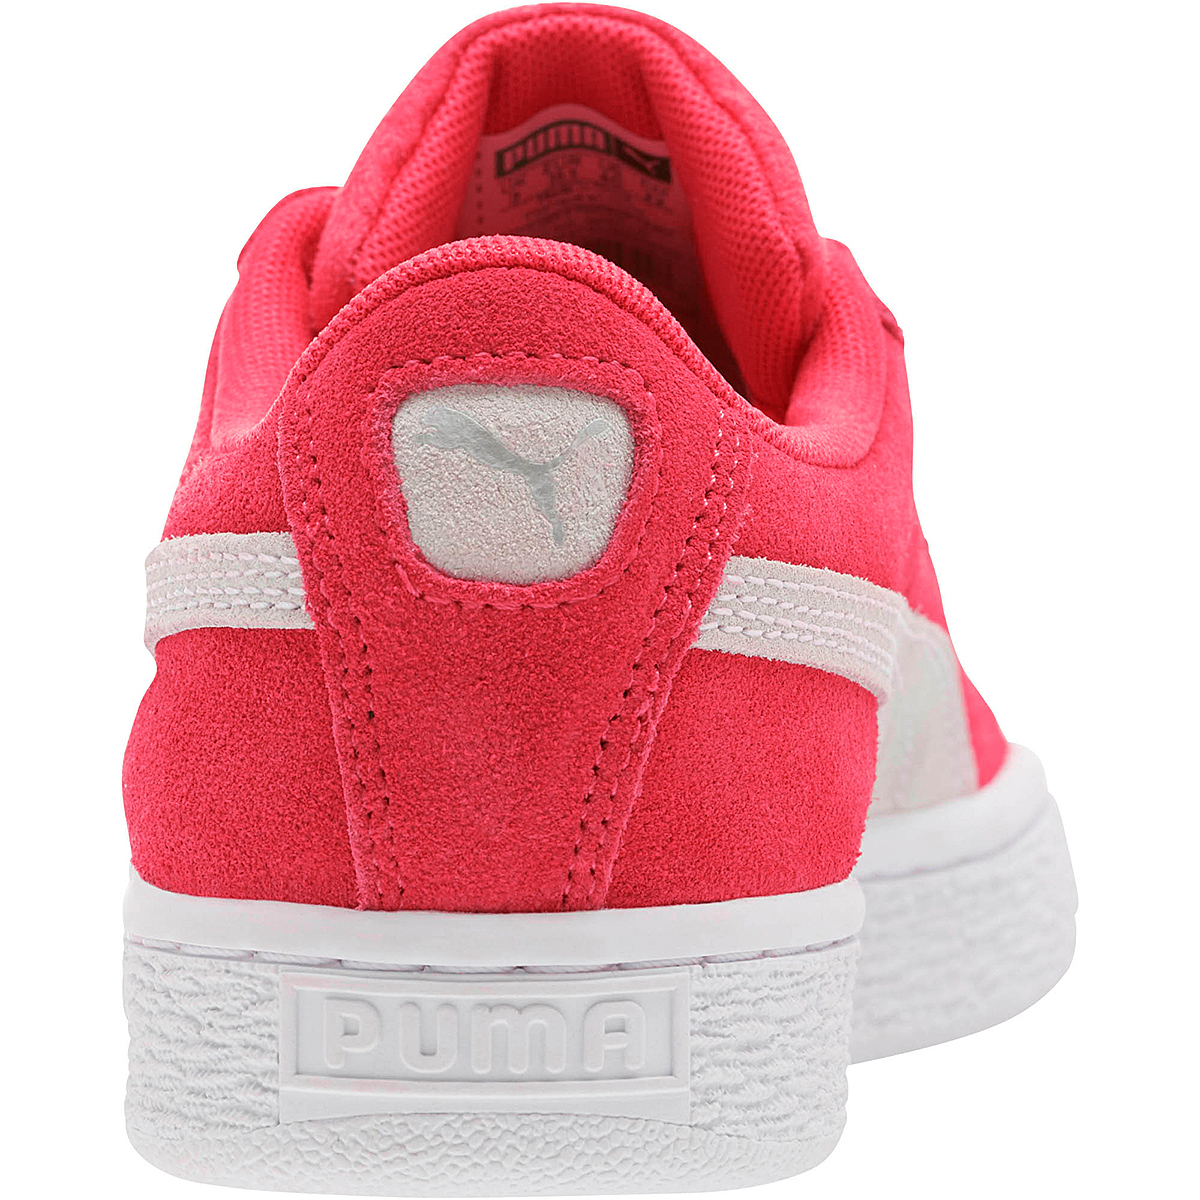 Puma Suede Classic JR Kinder Sneaker Low-Top pink 365073 04